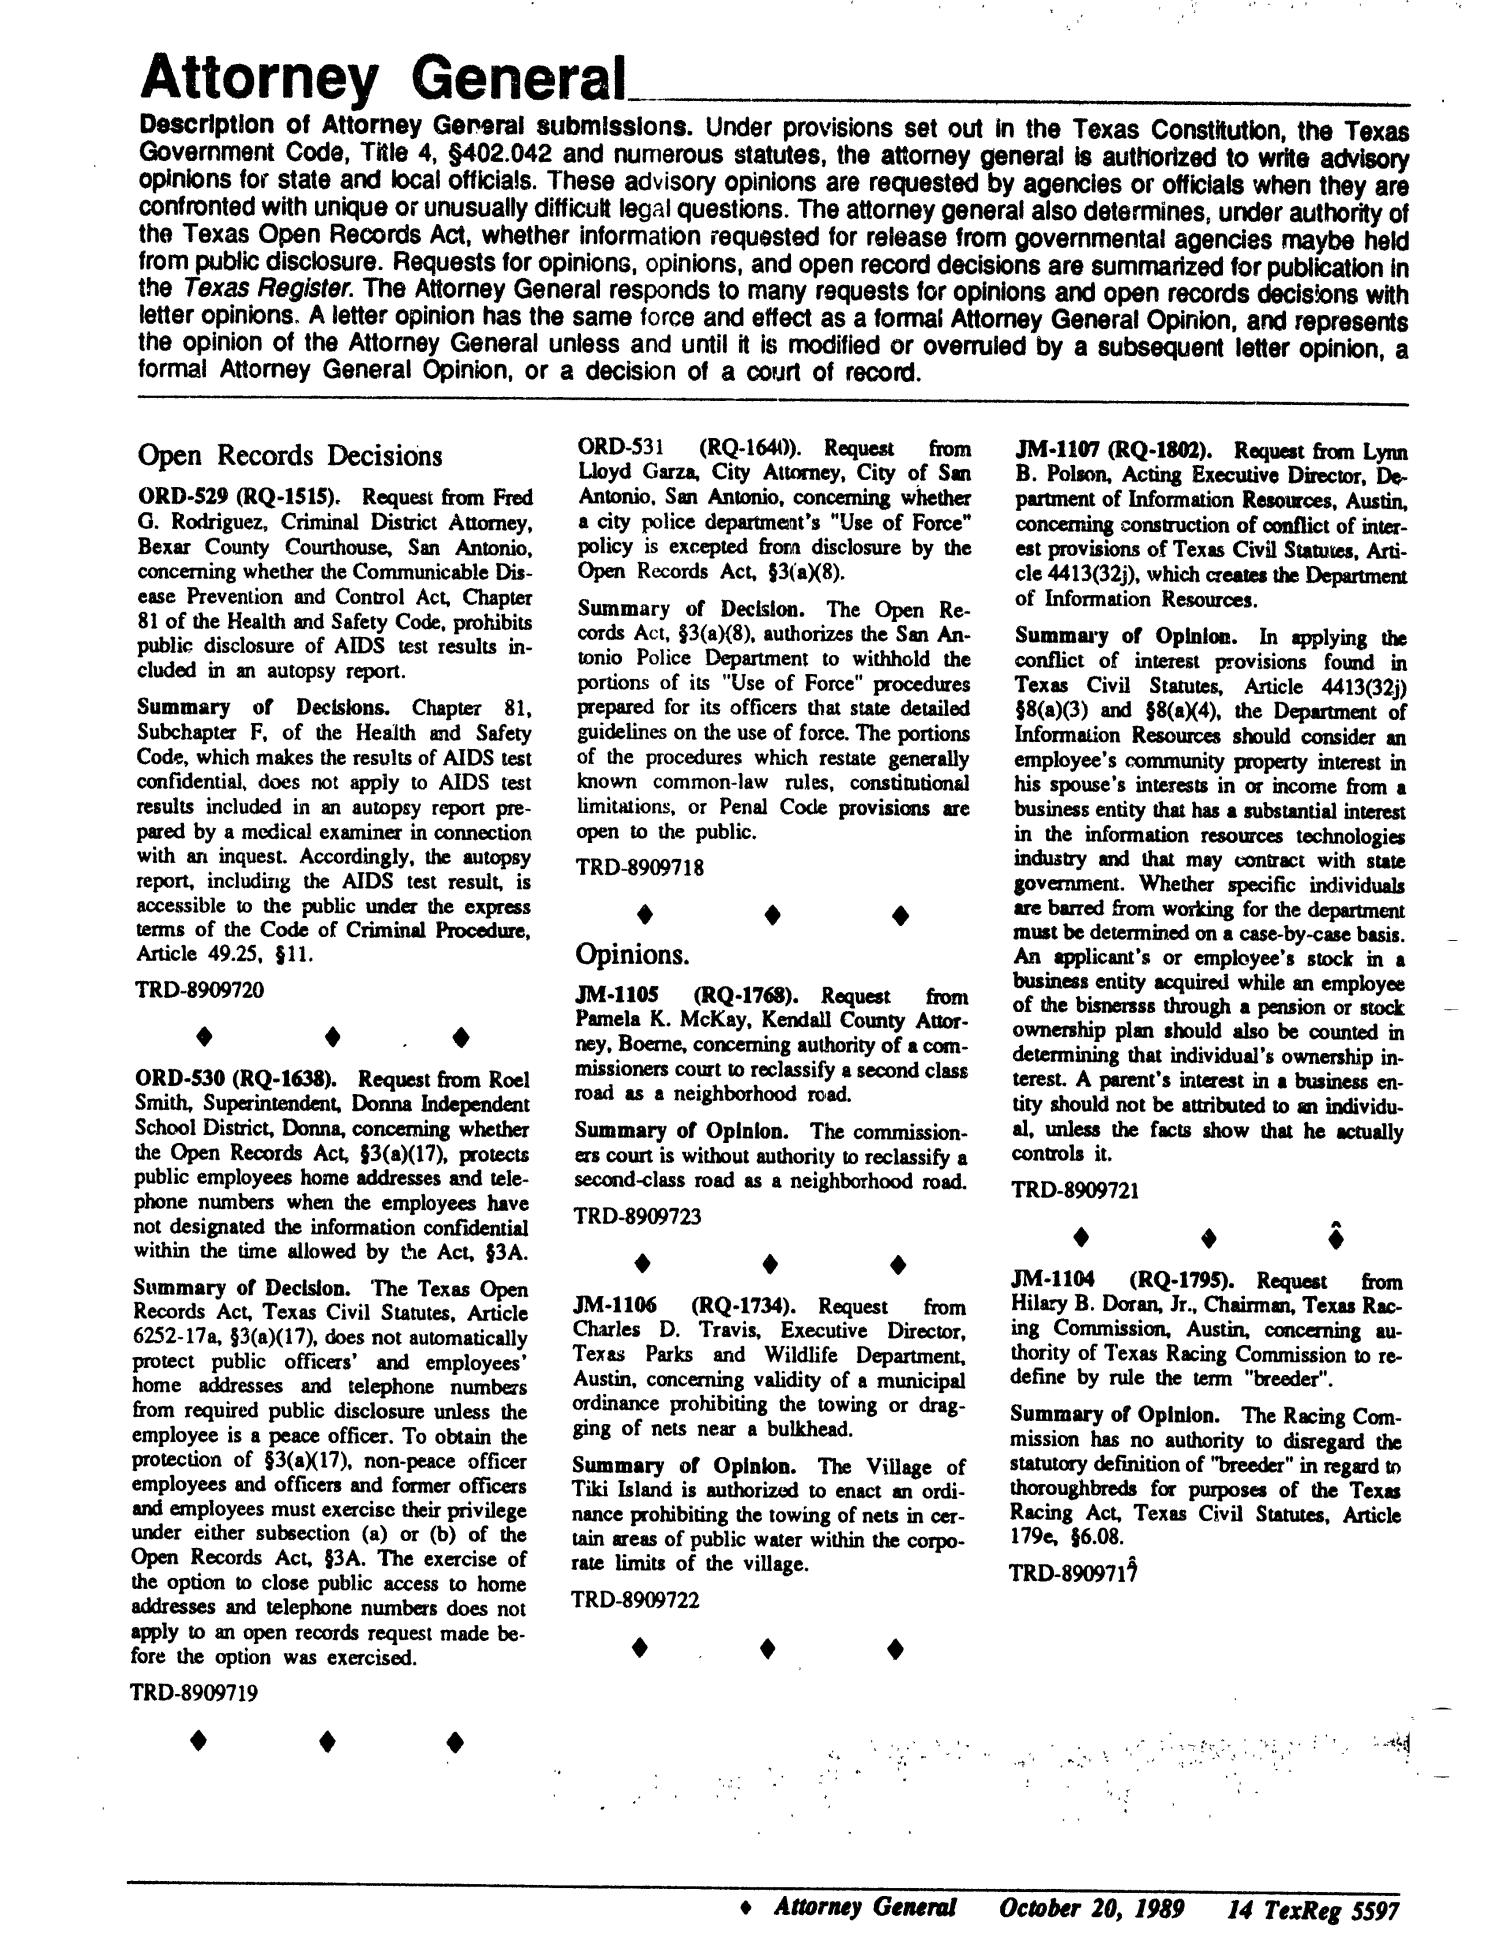 Texas Register, Volume 14, Number 78, Pages 5585-5650, October 20, 1989
                                                
                                                    5597
                                                